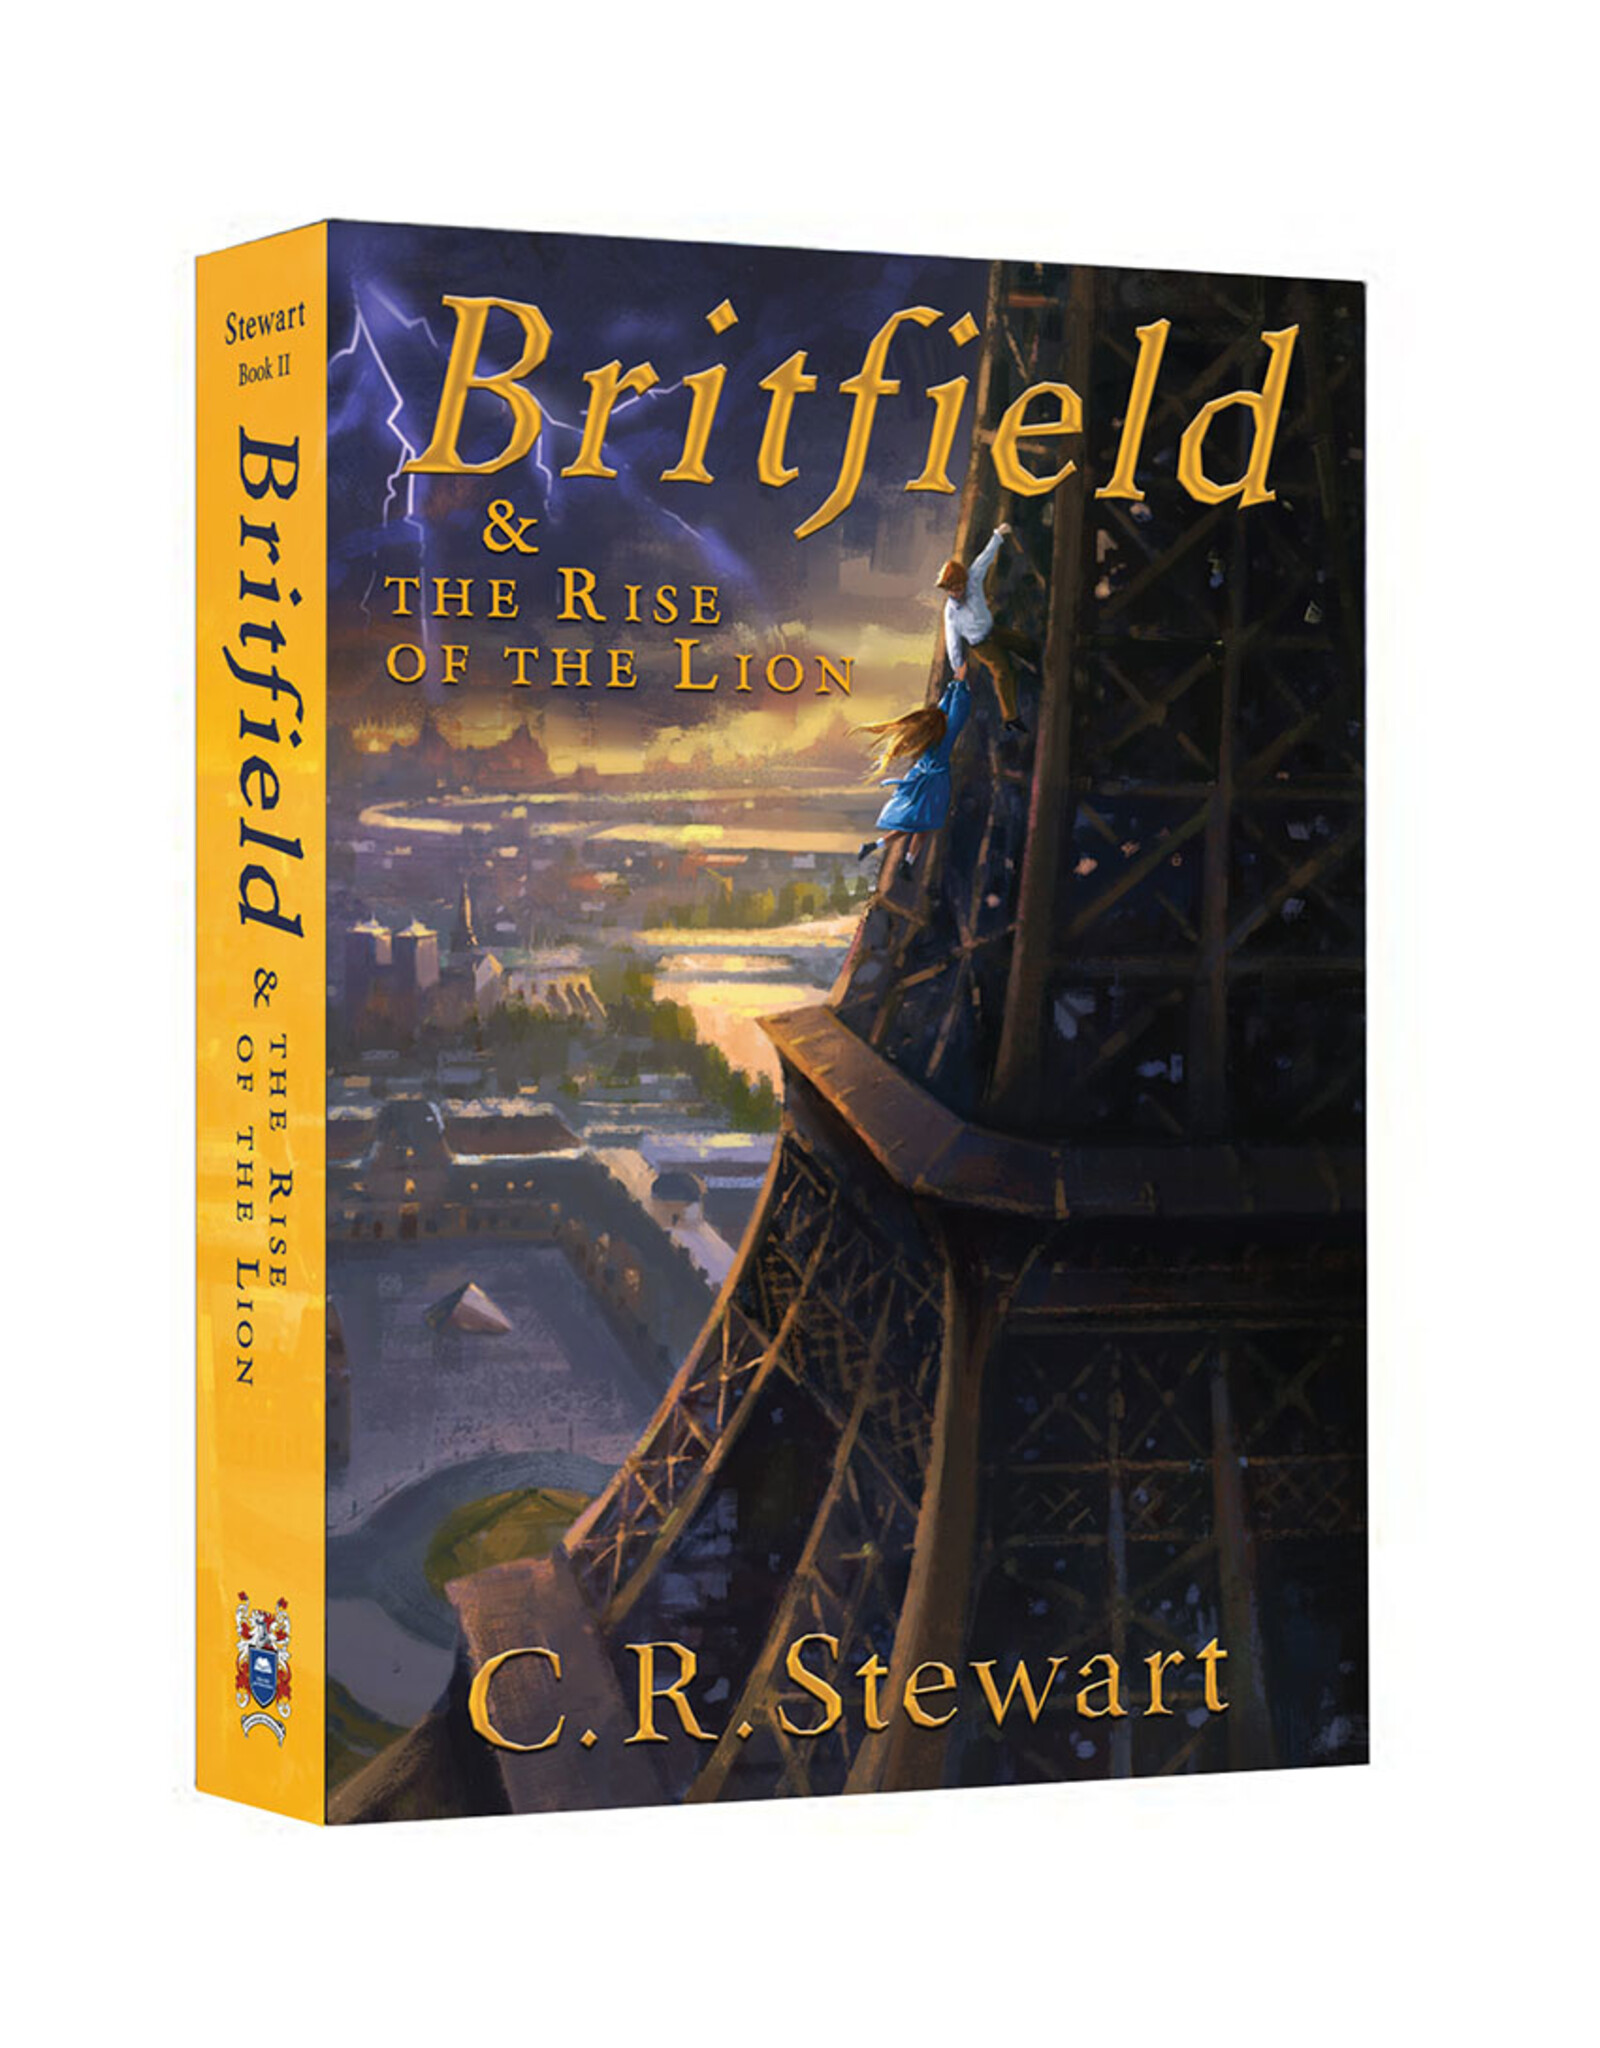 C.R. Stewart Britfield & the Rise of the Lion, Book II